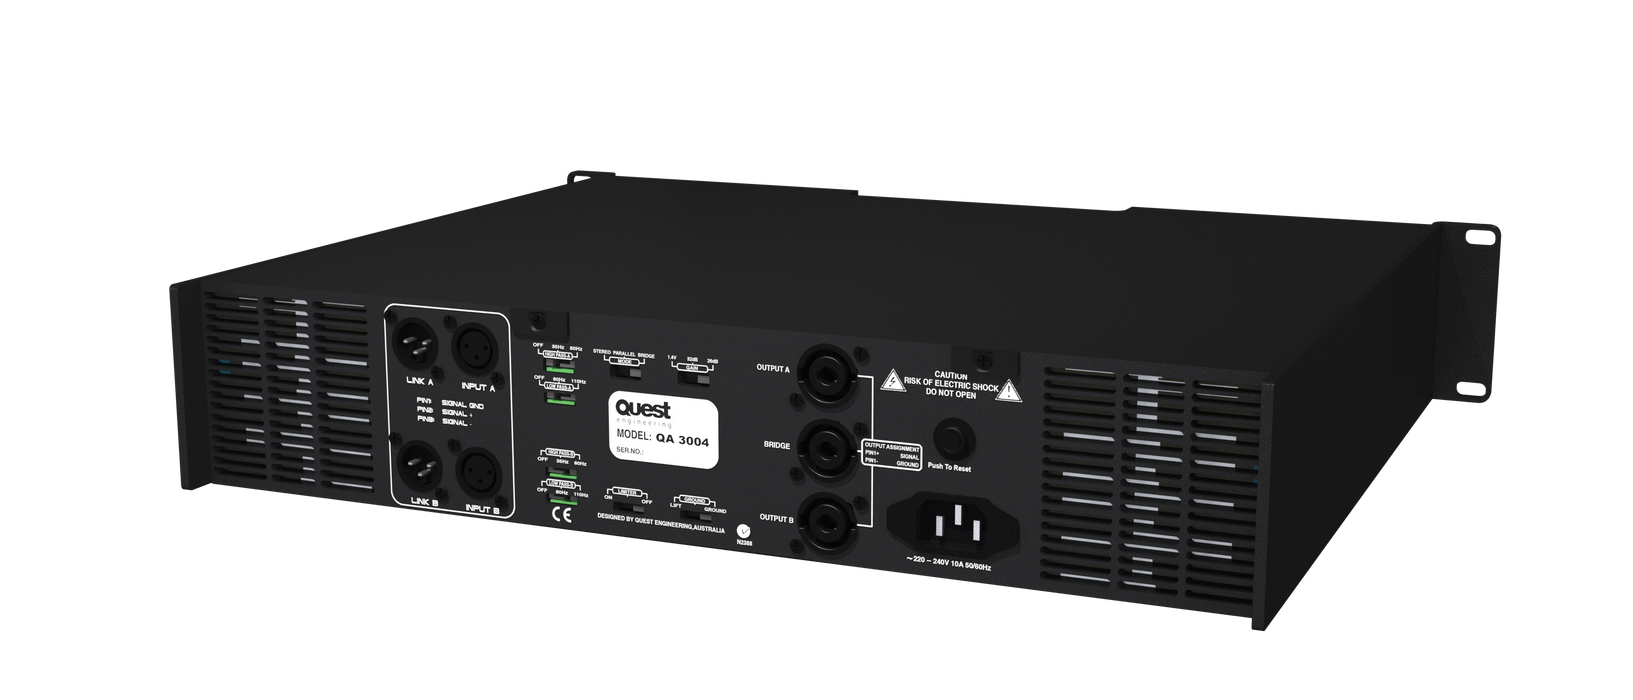 Quest - QA3004 - 2 Channel Amplifier